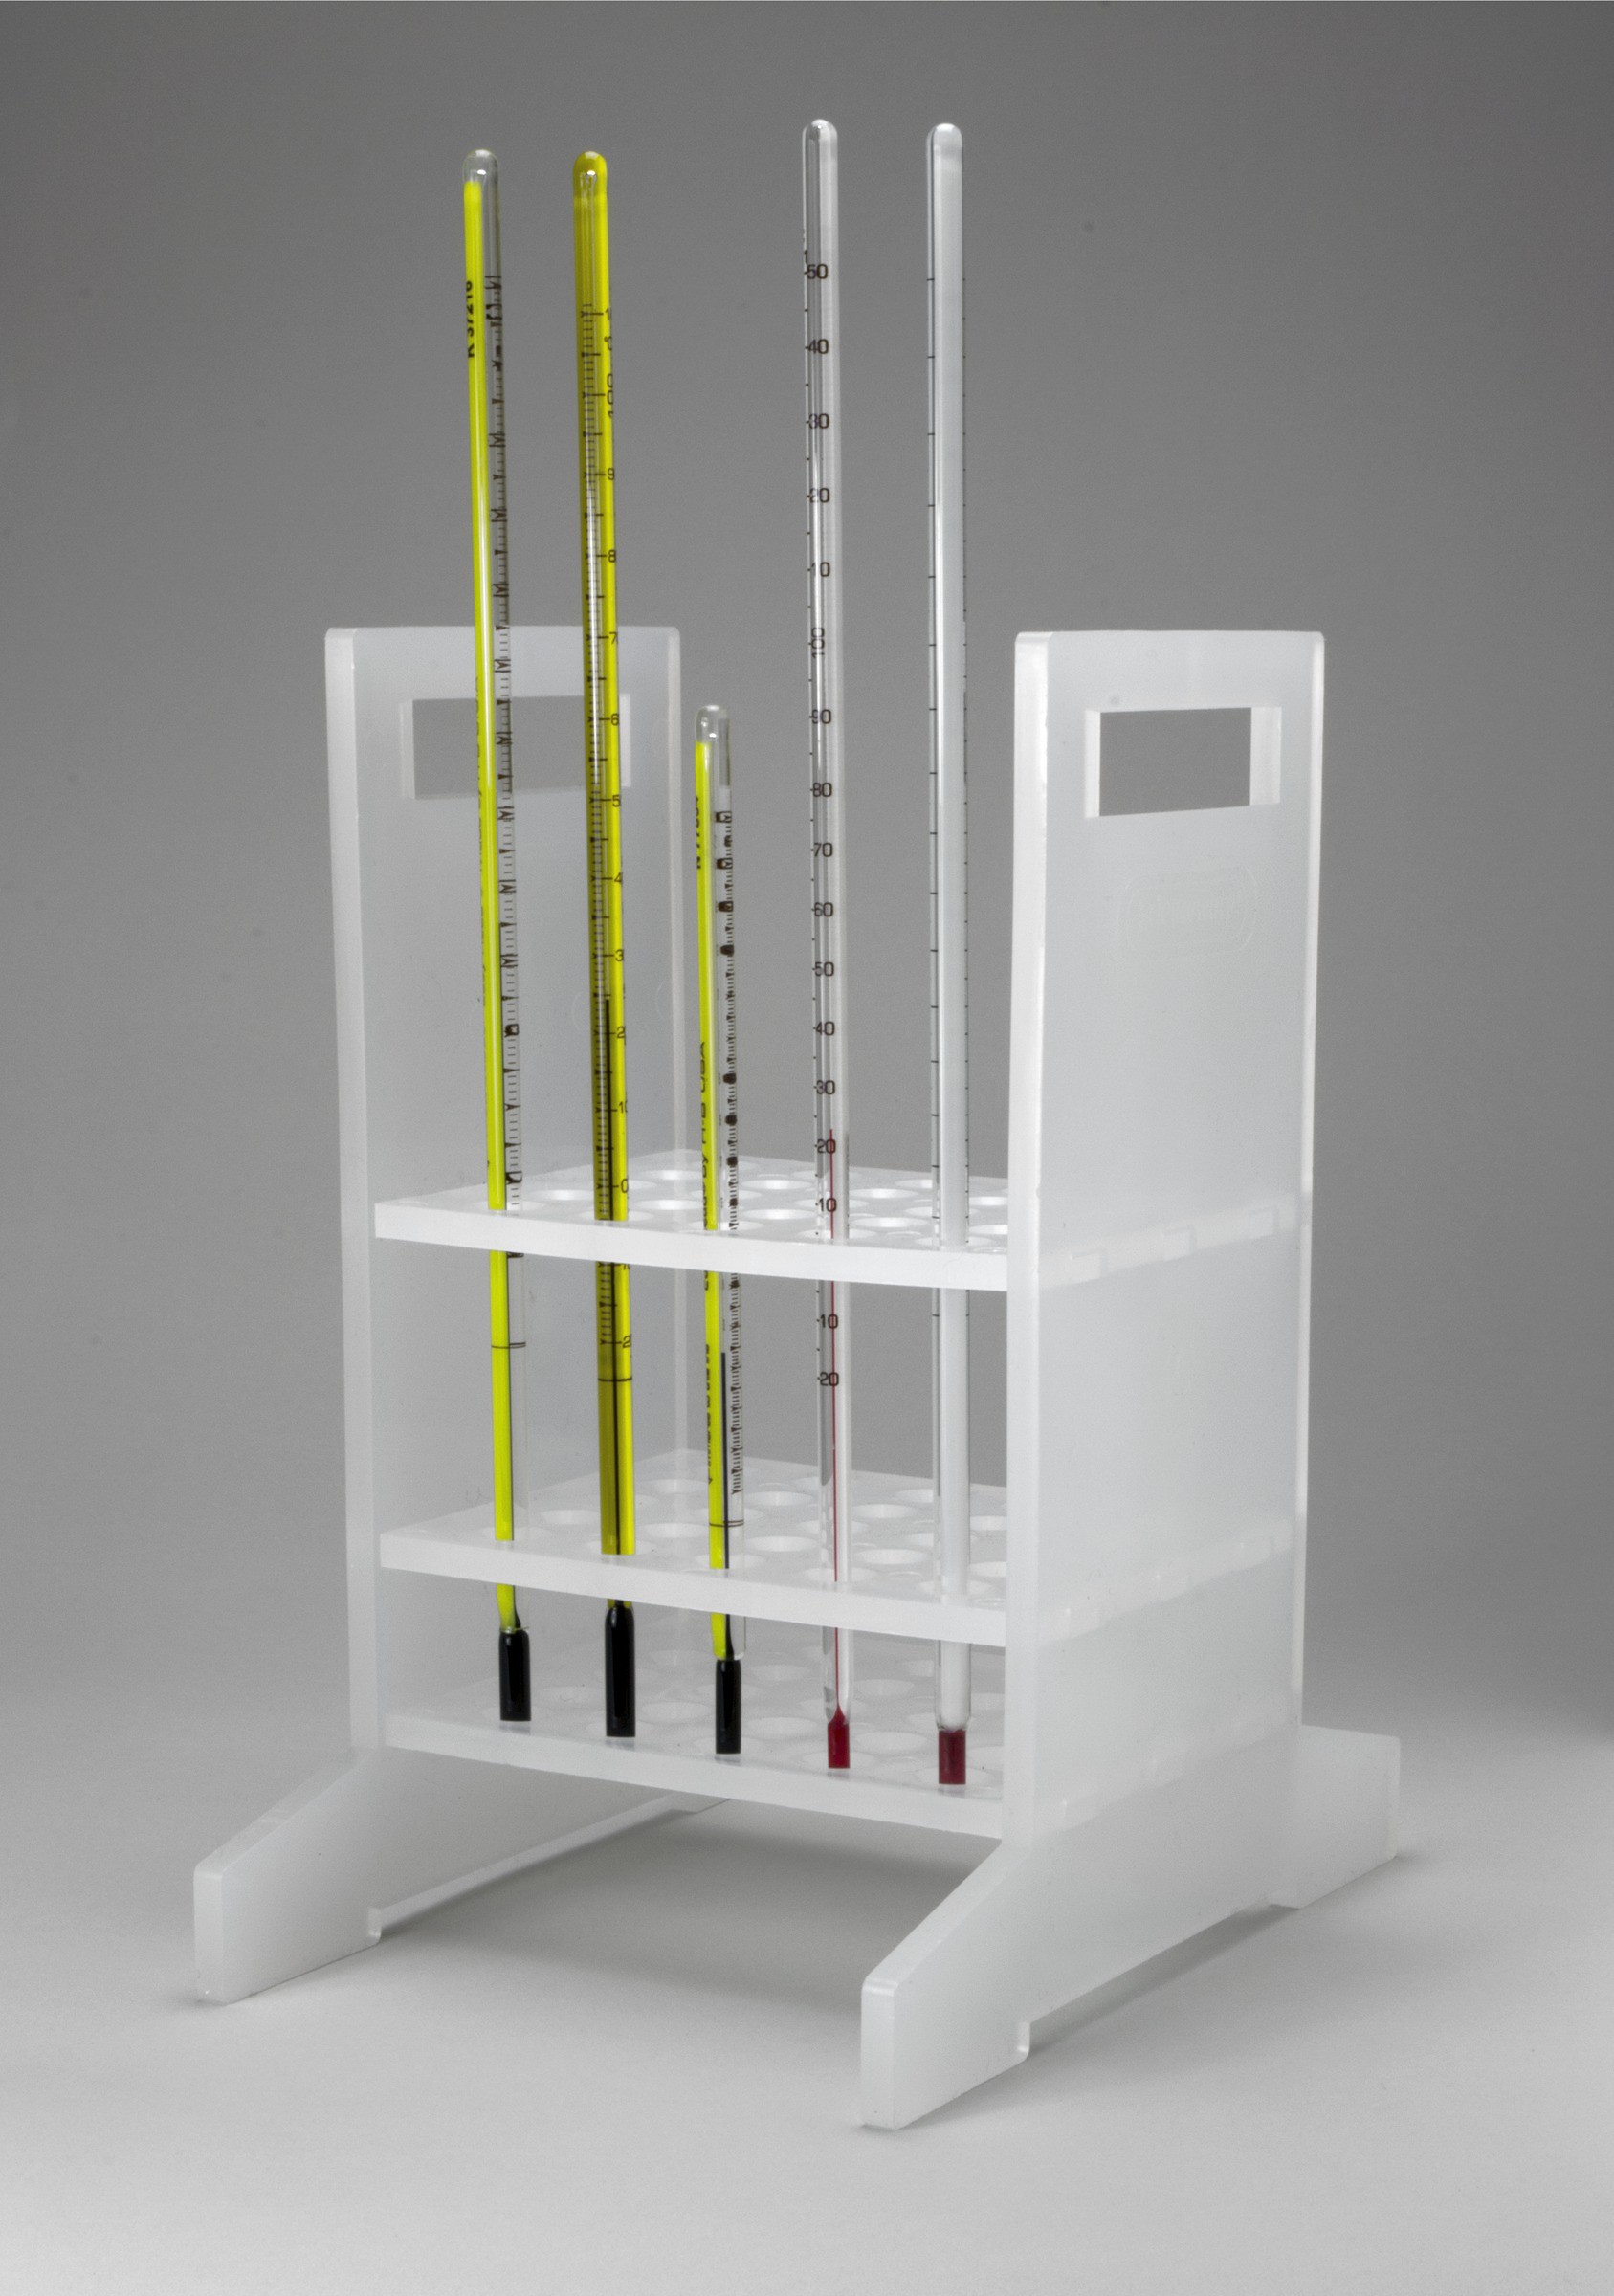 Bel-Art General Purpose Liquid-In-Glass Laboratory Thermometer -20